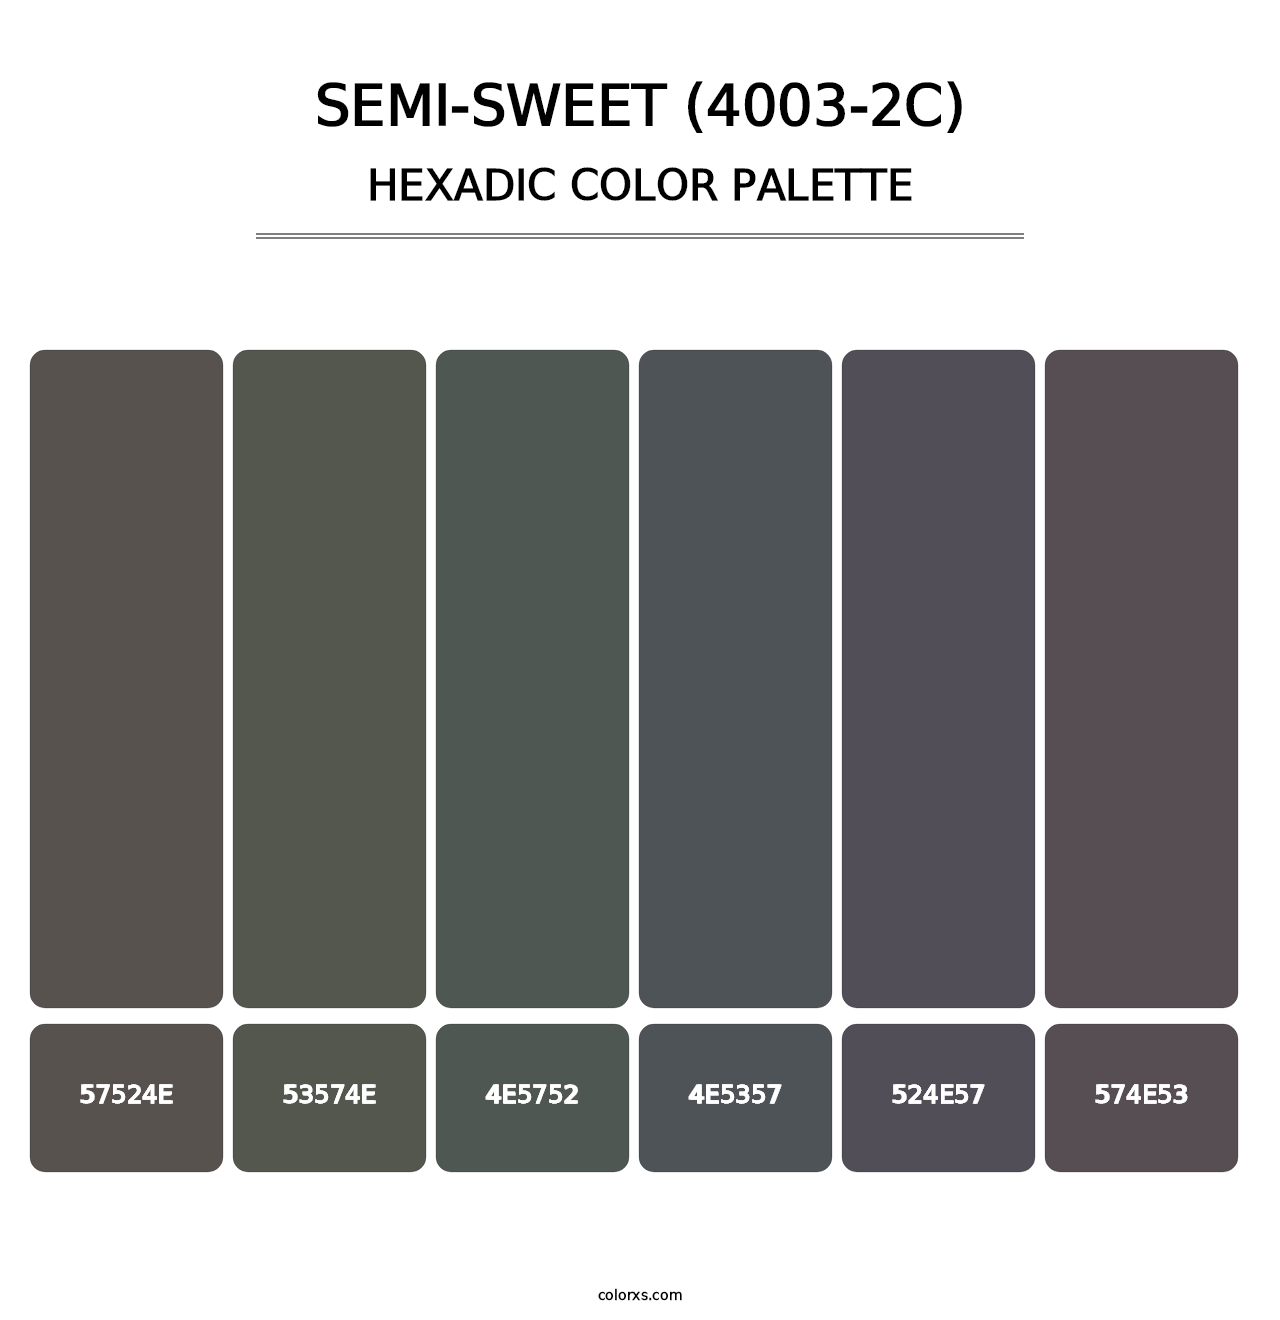 Semi-Sweet (4003-2C) - Hexadic Color Palette